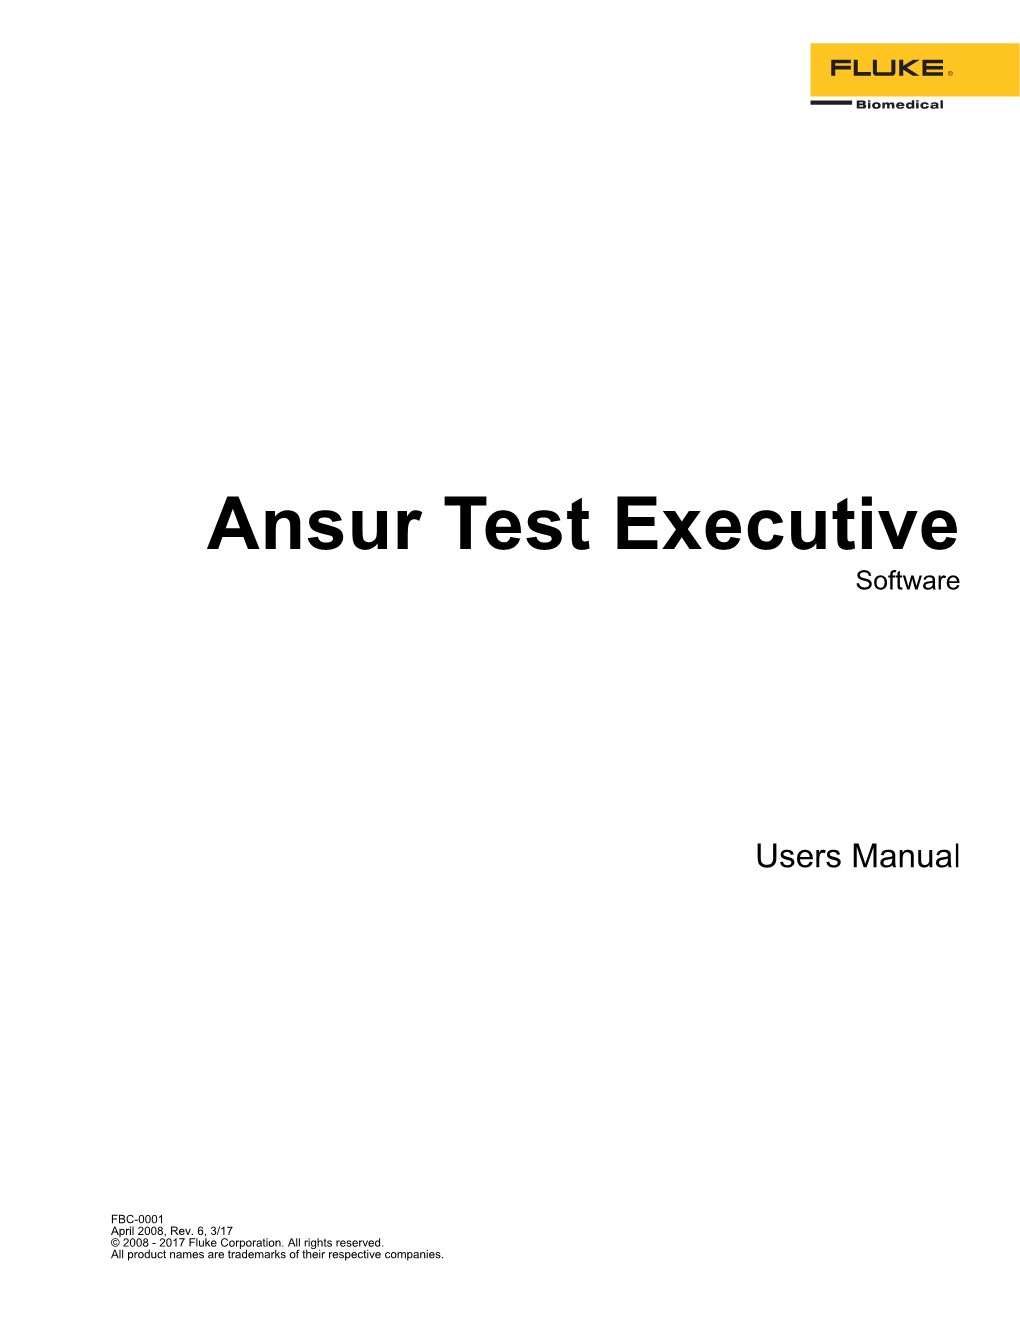 Ansur Test Executive Manual